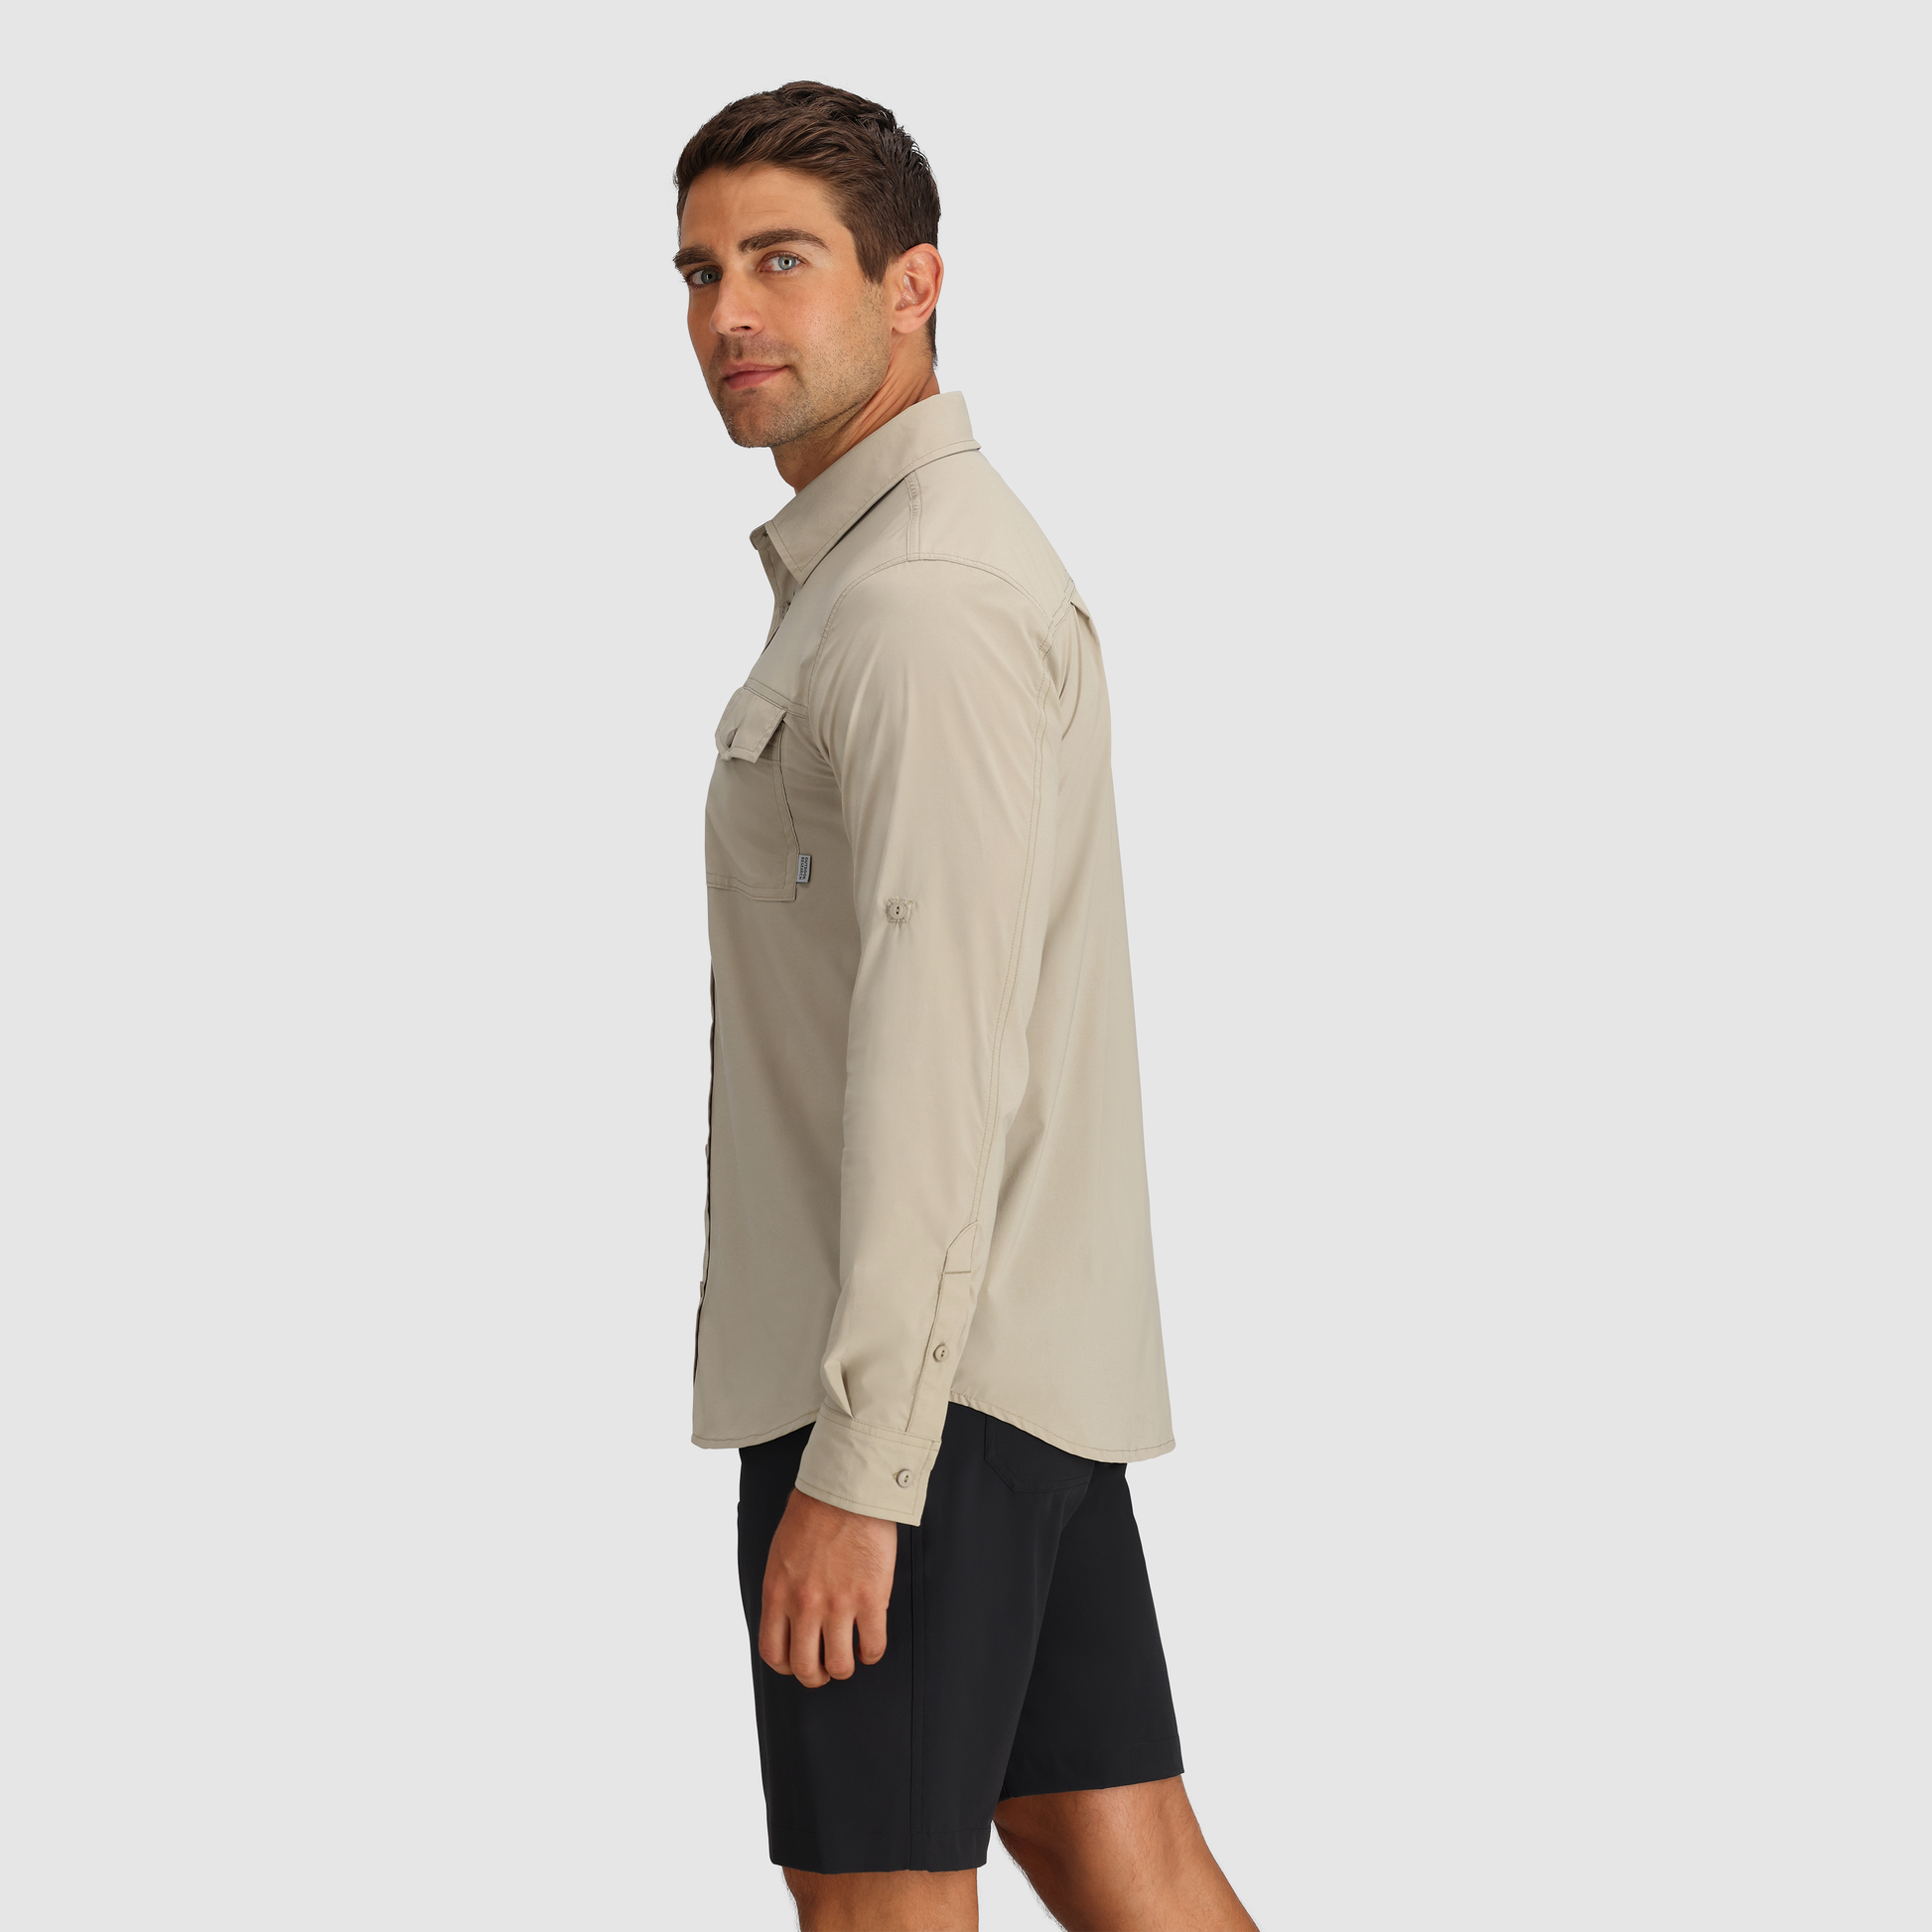 Men's Long Sleeve Tops - Outdoors Oriented